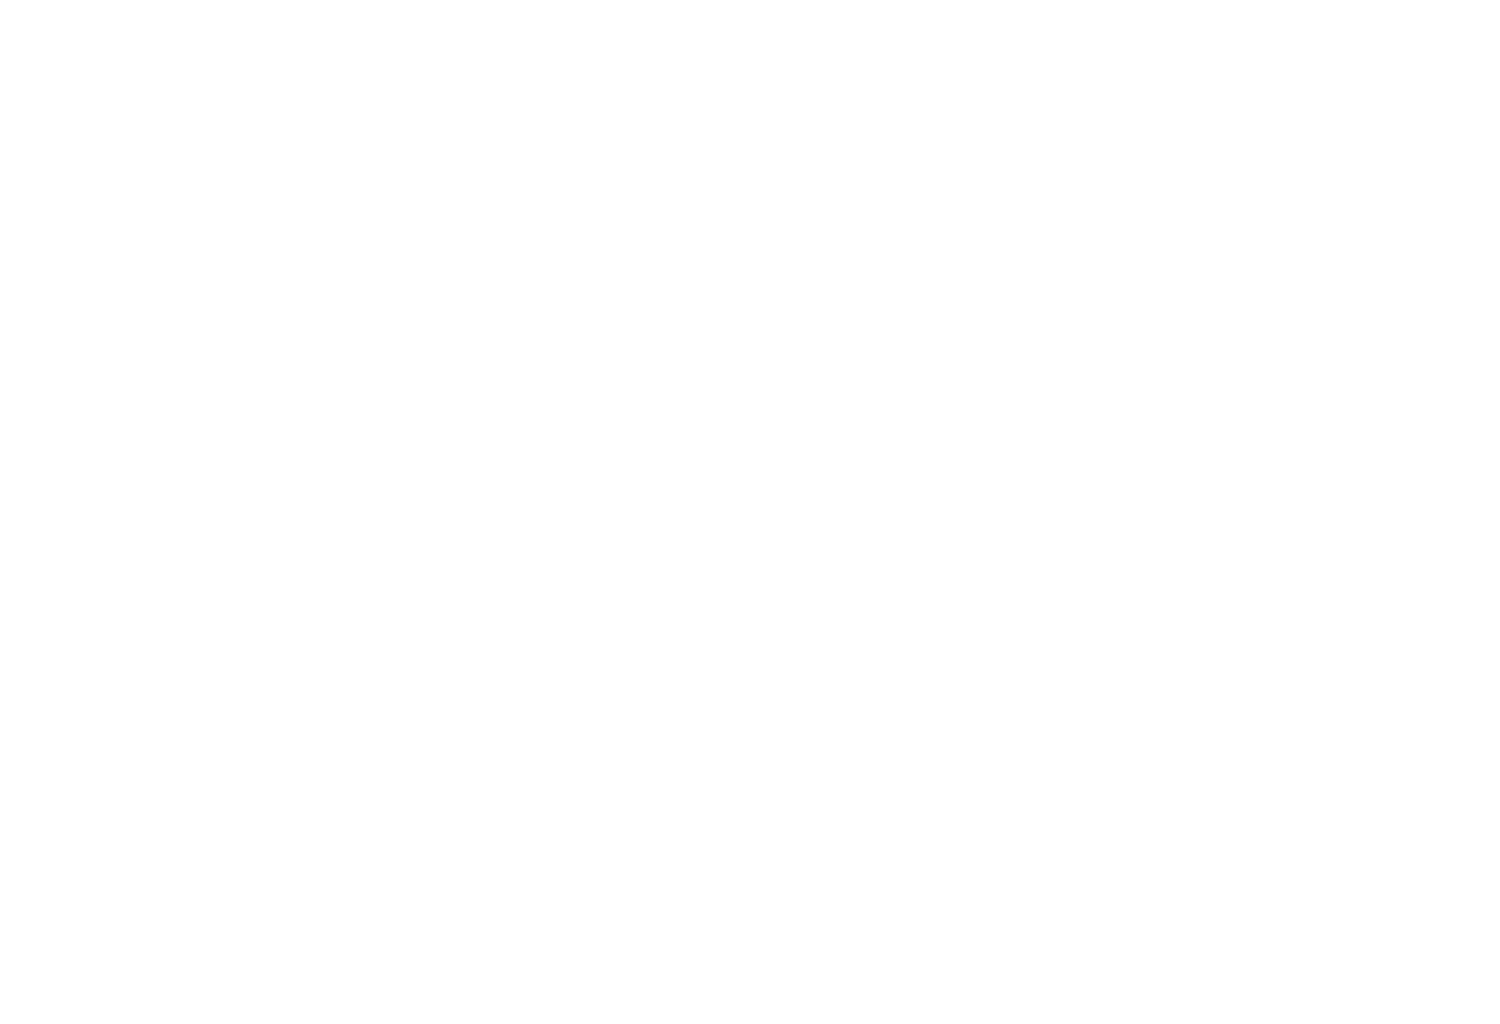 Waltman Wellness